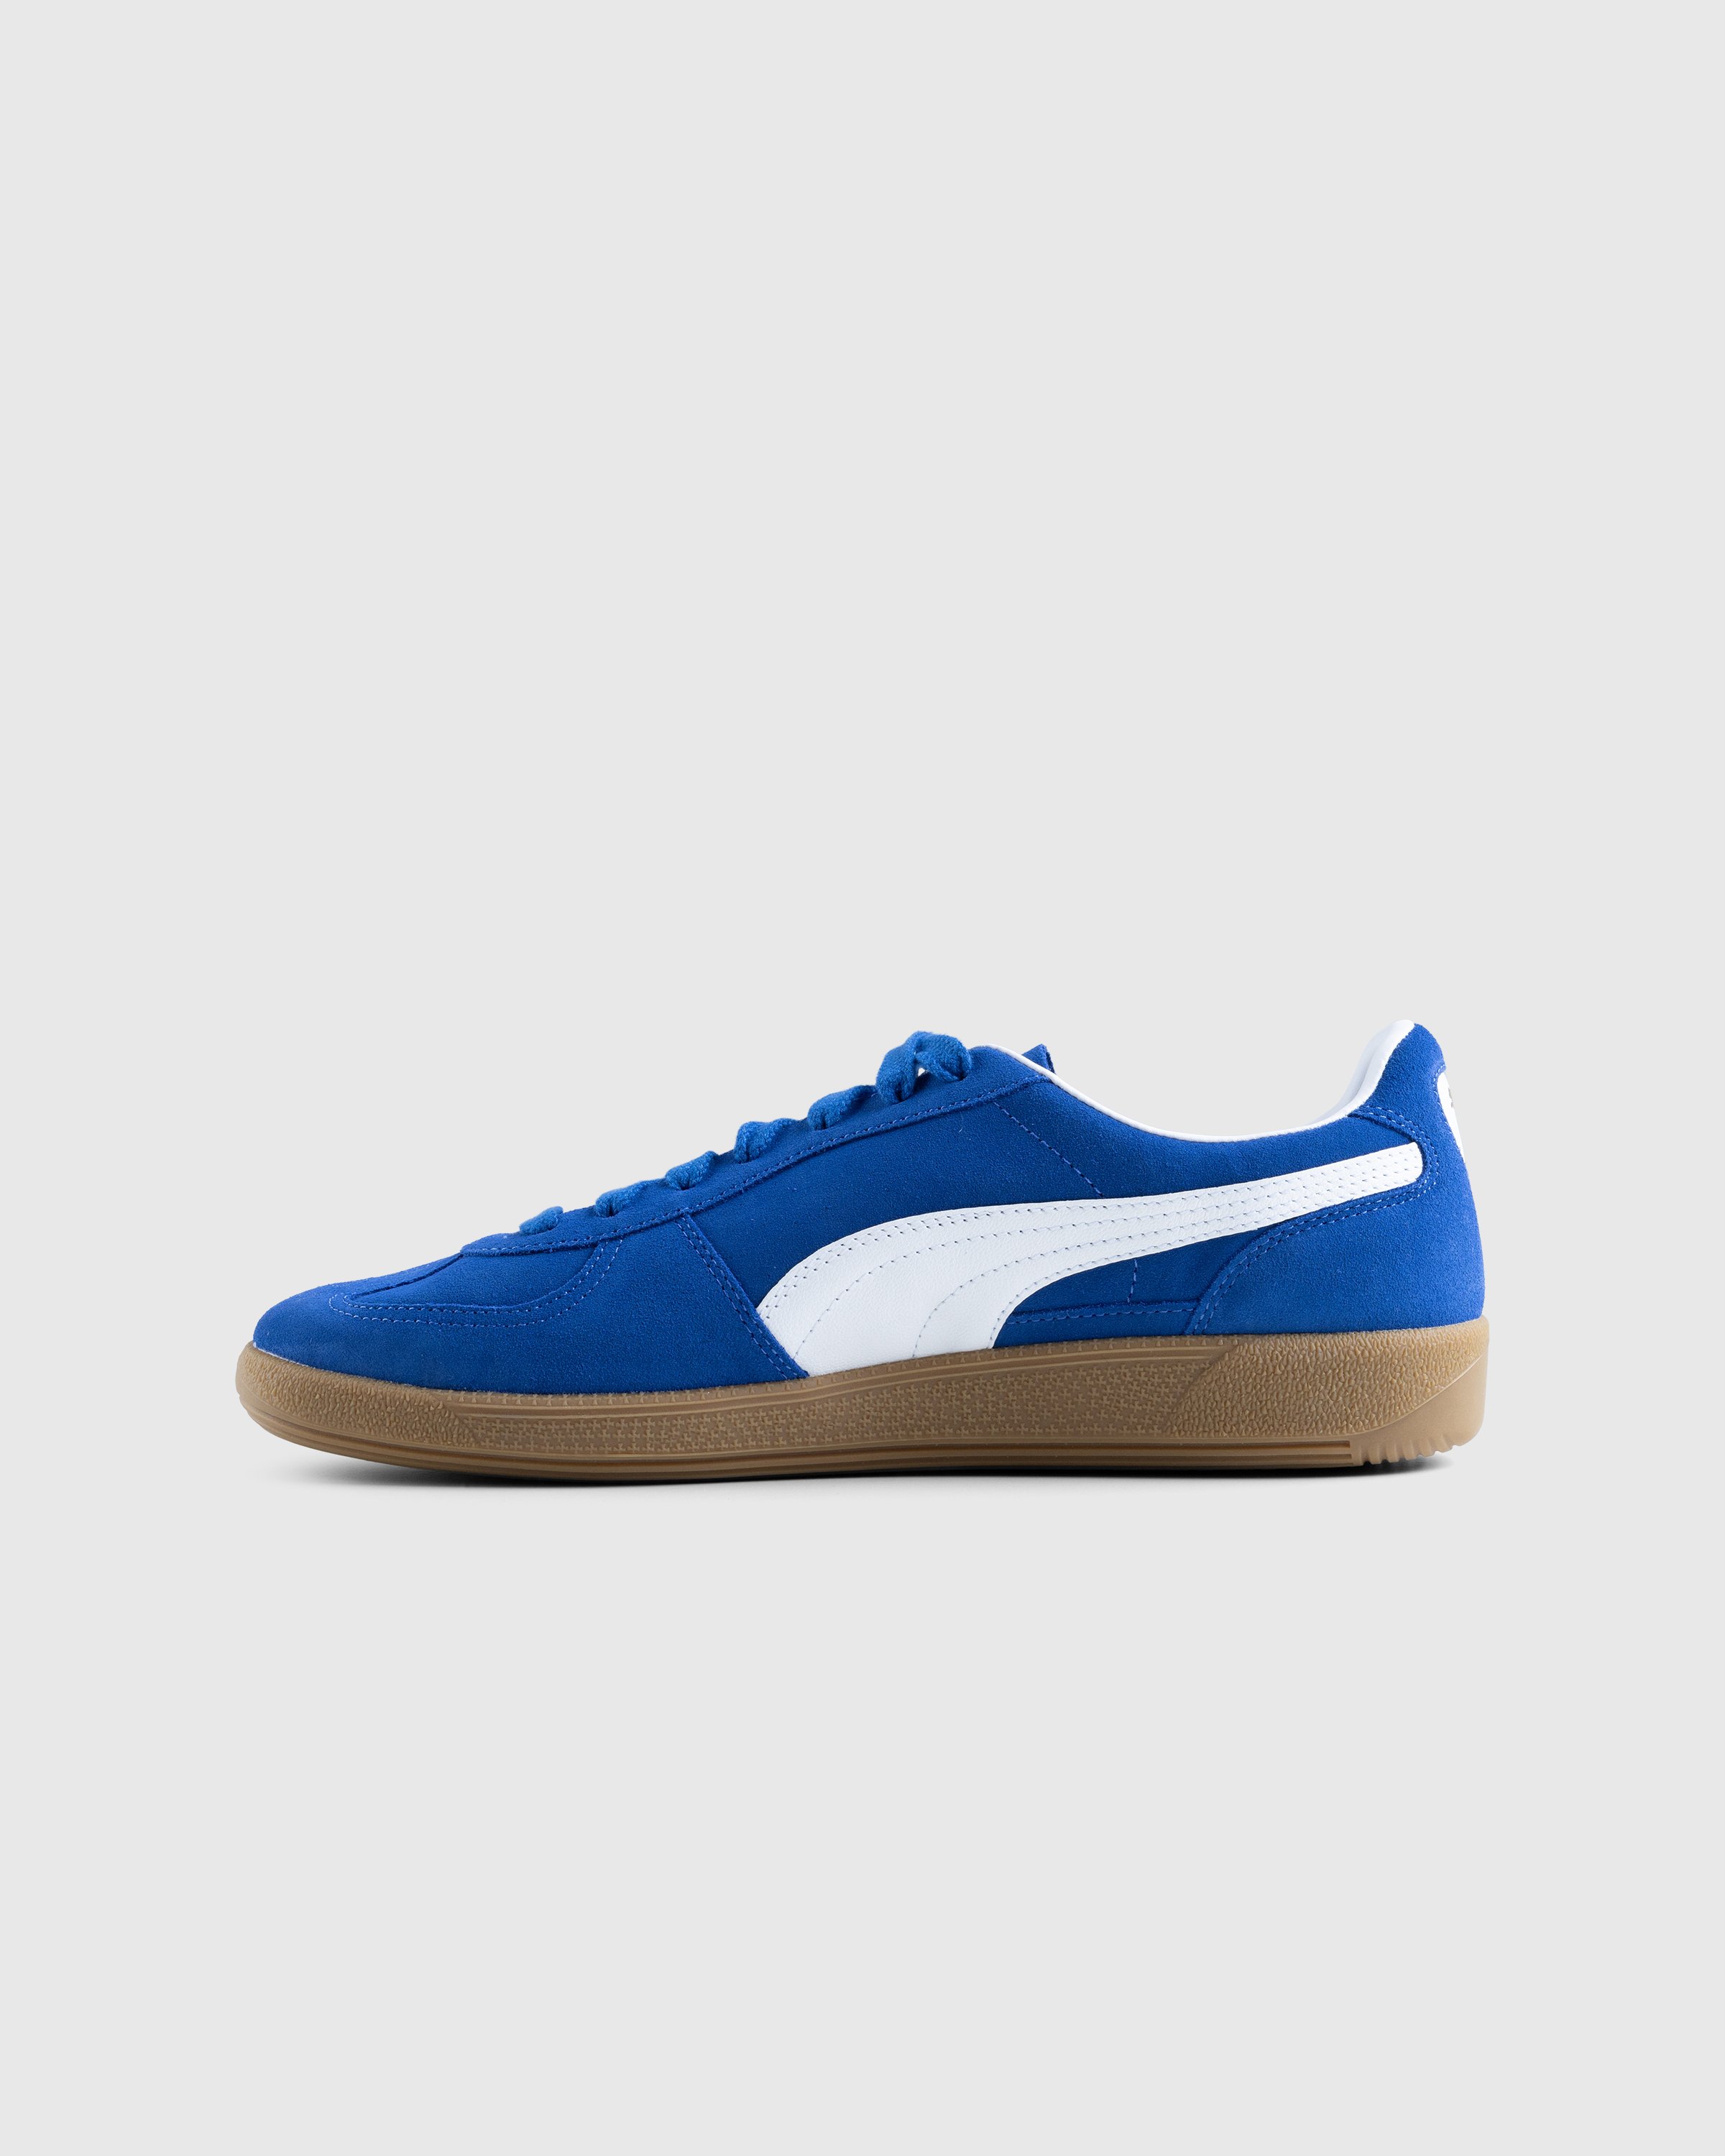 Puma - Palermo Cobalt Glaze/White - Footwear - Blue - Image 2